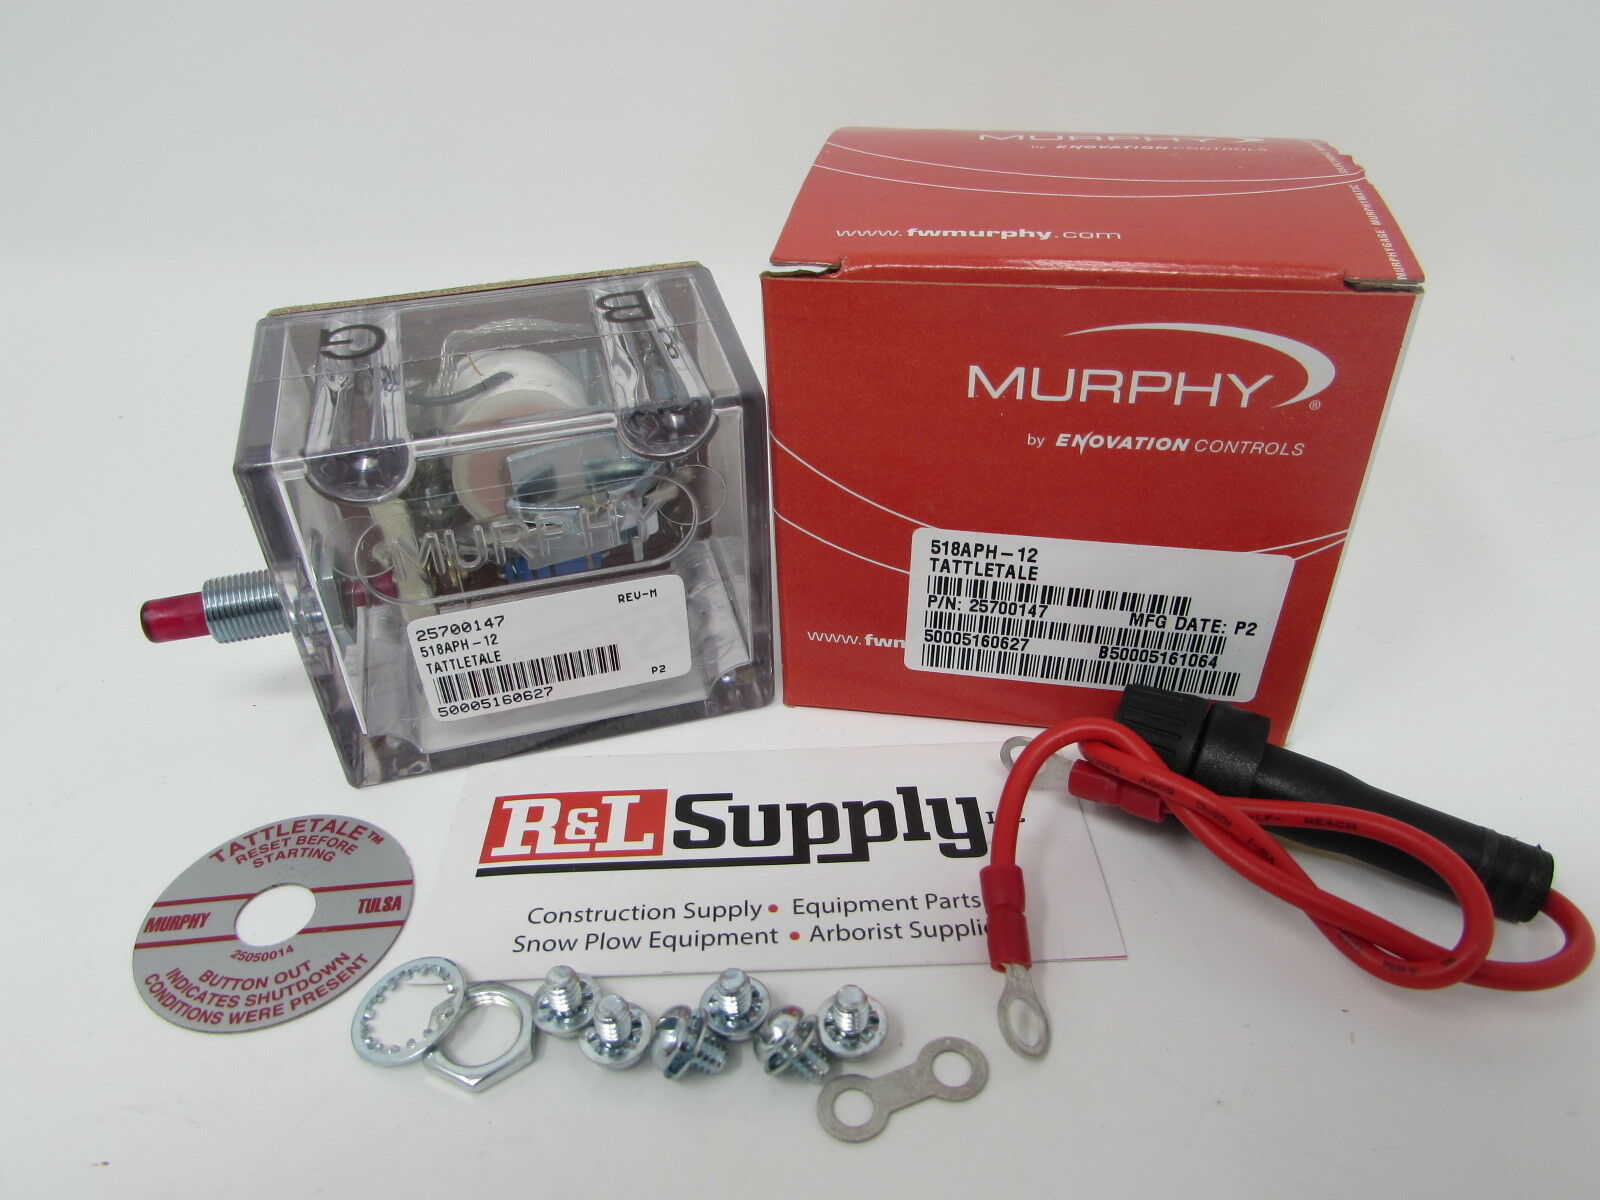 New 518aph-12 Murphy 12 Volt Tattletale Switch